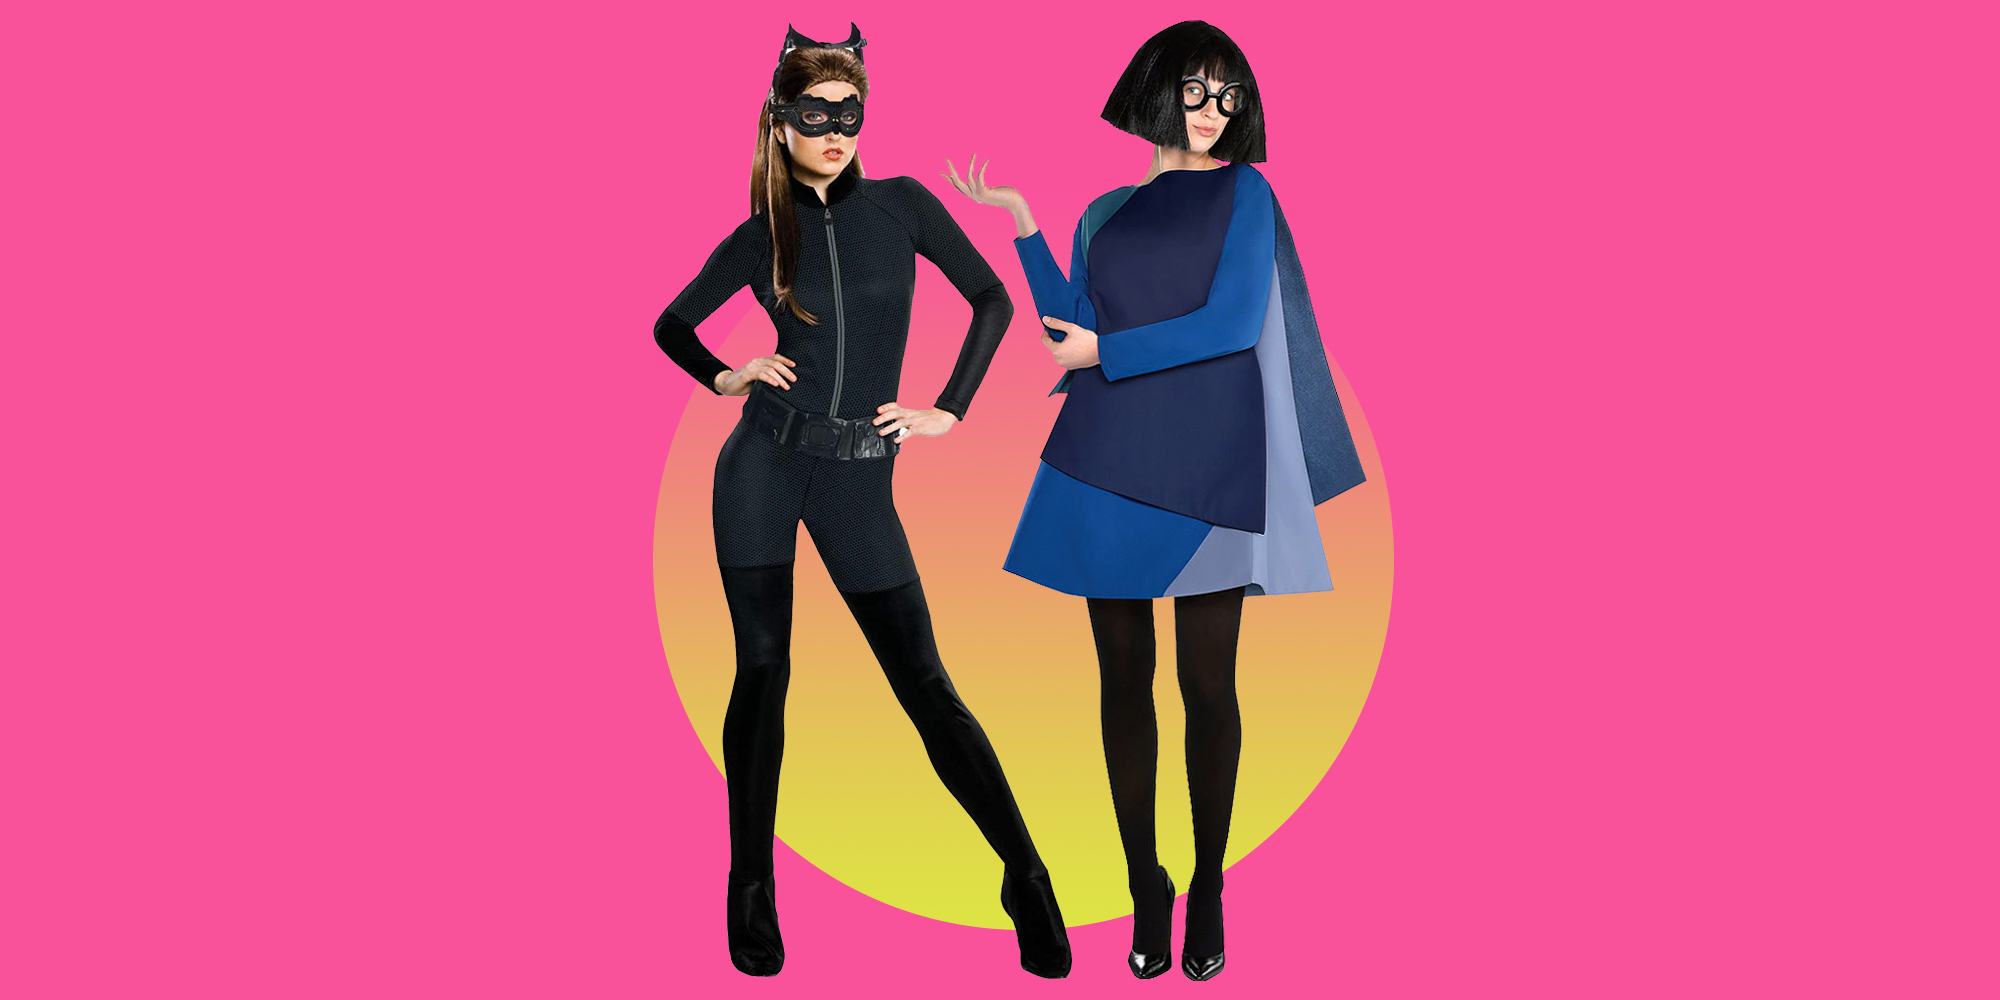 28 Badass Halloween Costume Ideas For Women 21 Cool Girl Costumes